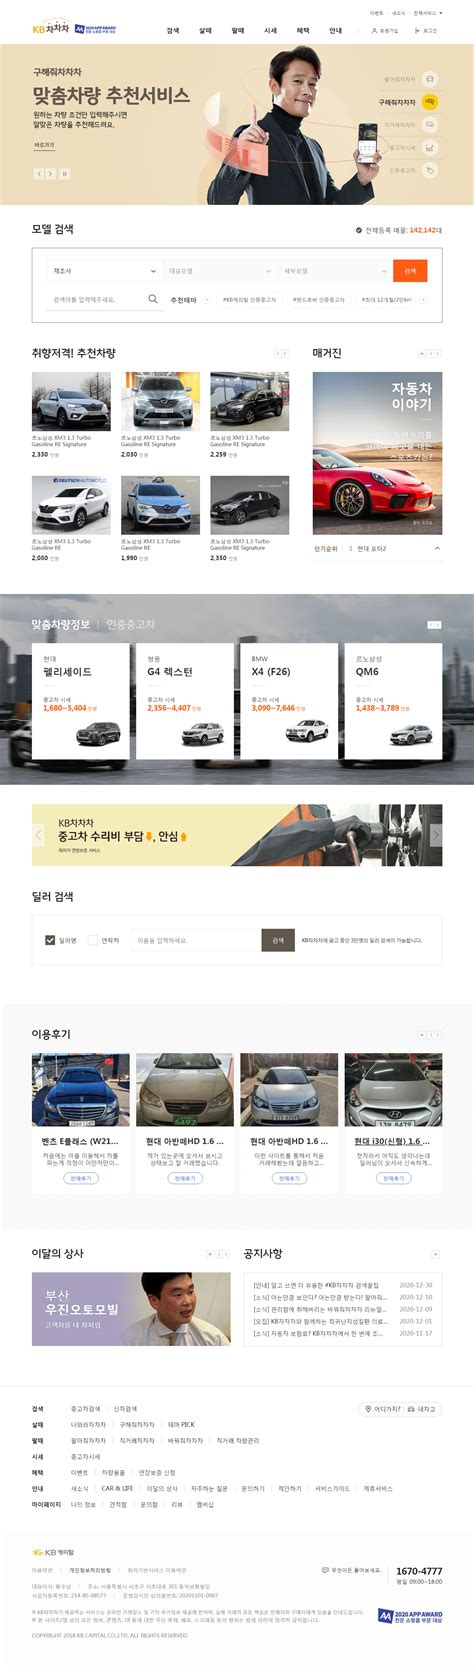 KB chacha韩国二手车平台网站设计 - 设计之家